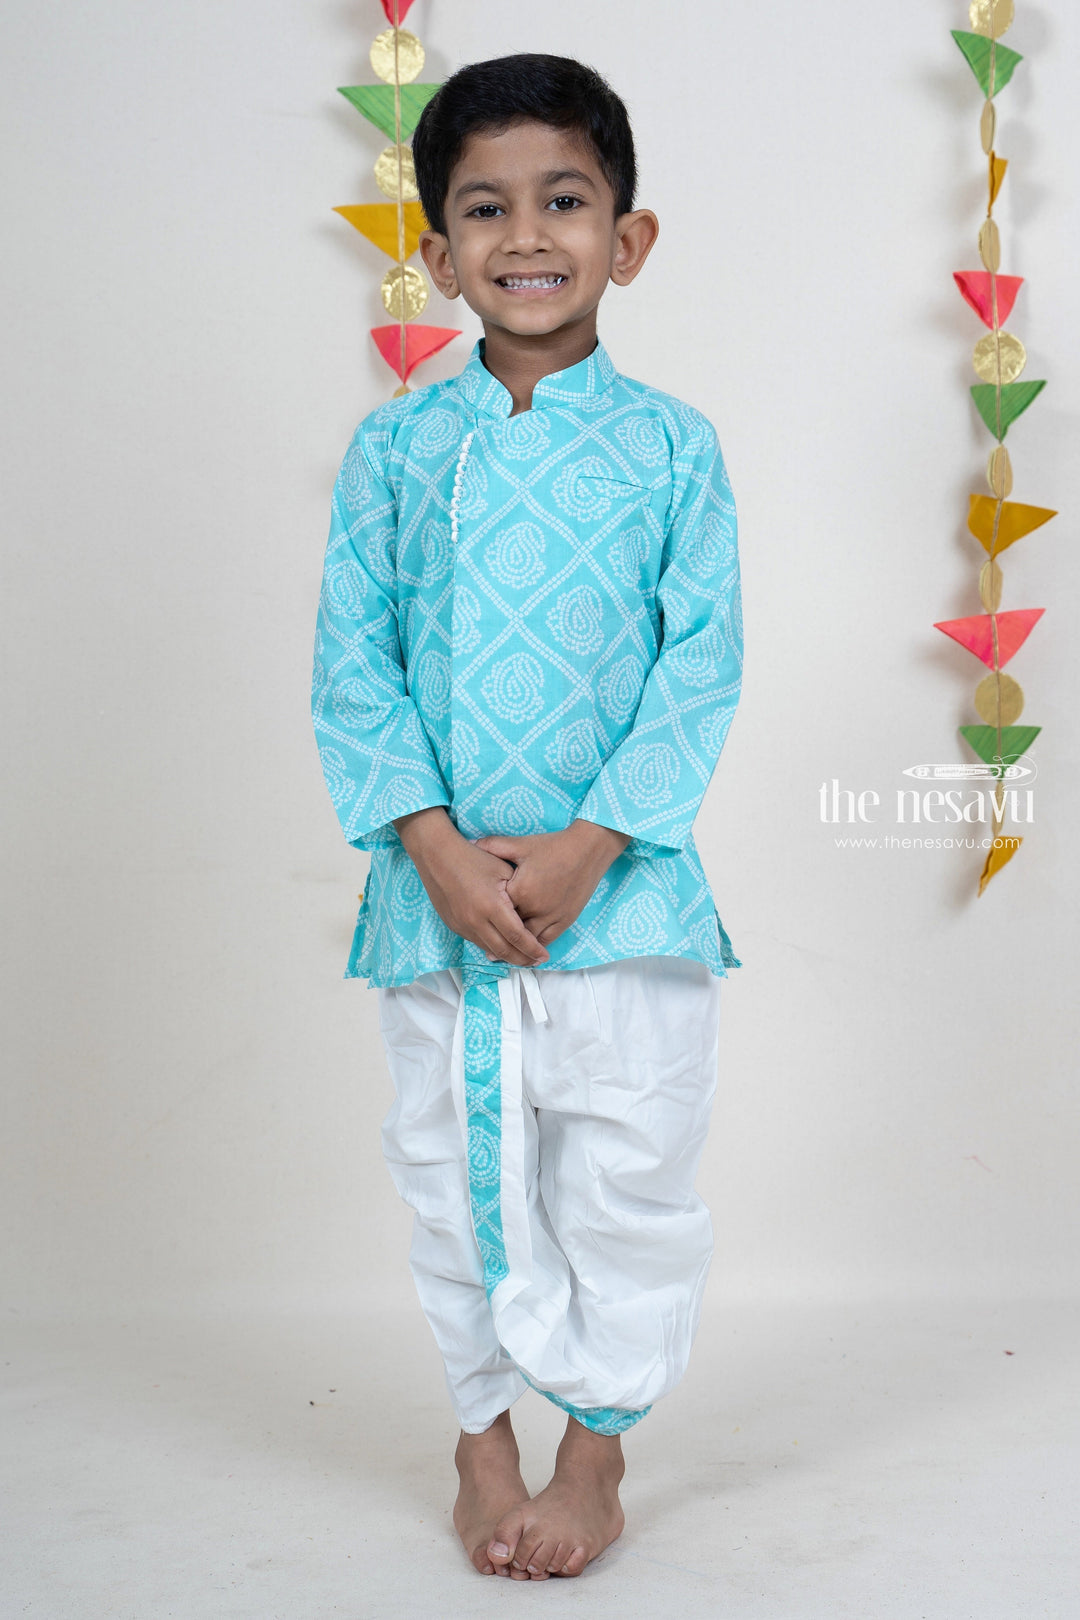 The Nesavu Ethnic Sets Sky Blue Bandhani Printed Designer Kurta For Baby Boys psr silks Nesavu 10 (NB) / skyblue BES212B